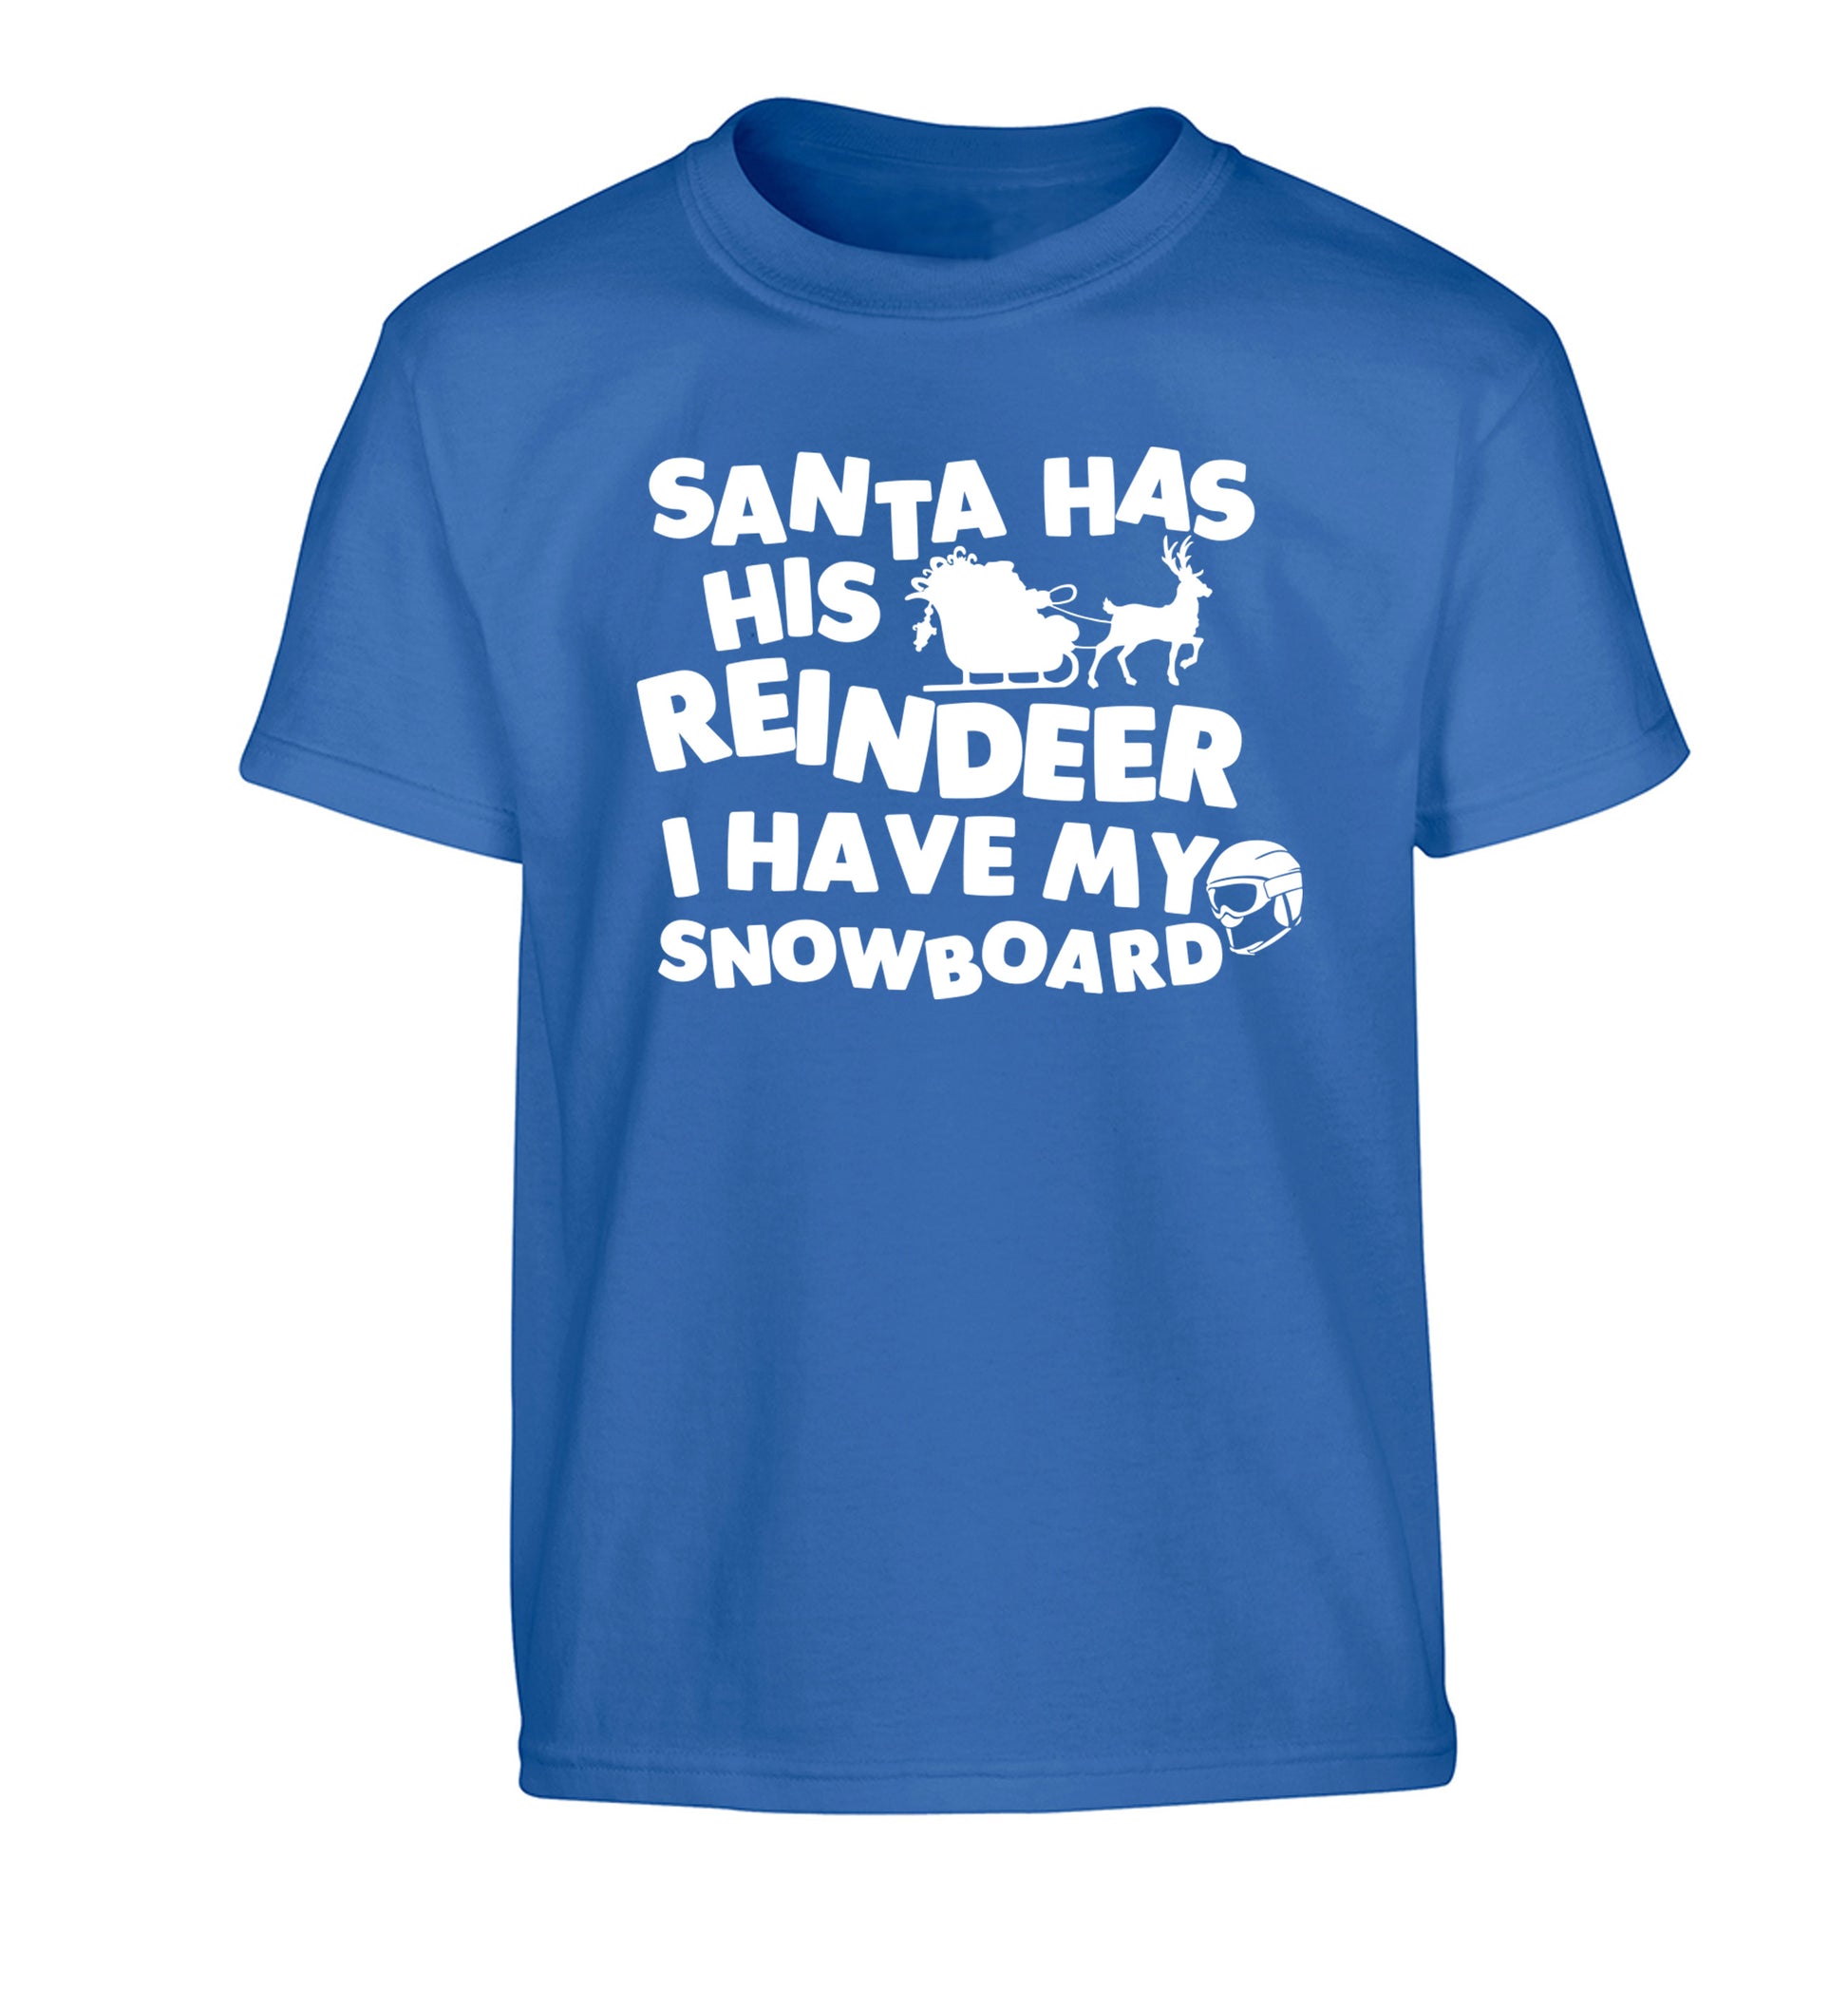 Santa has his reindeer I have my snowboard Children's blue Tshirt 12-14 Years